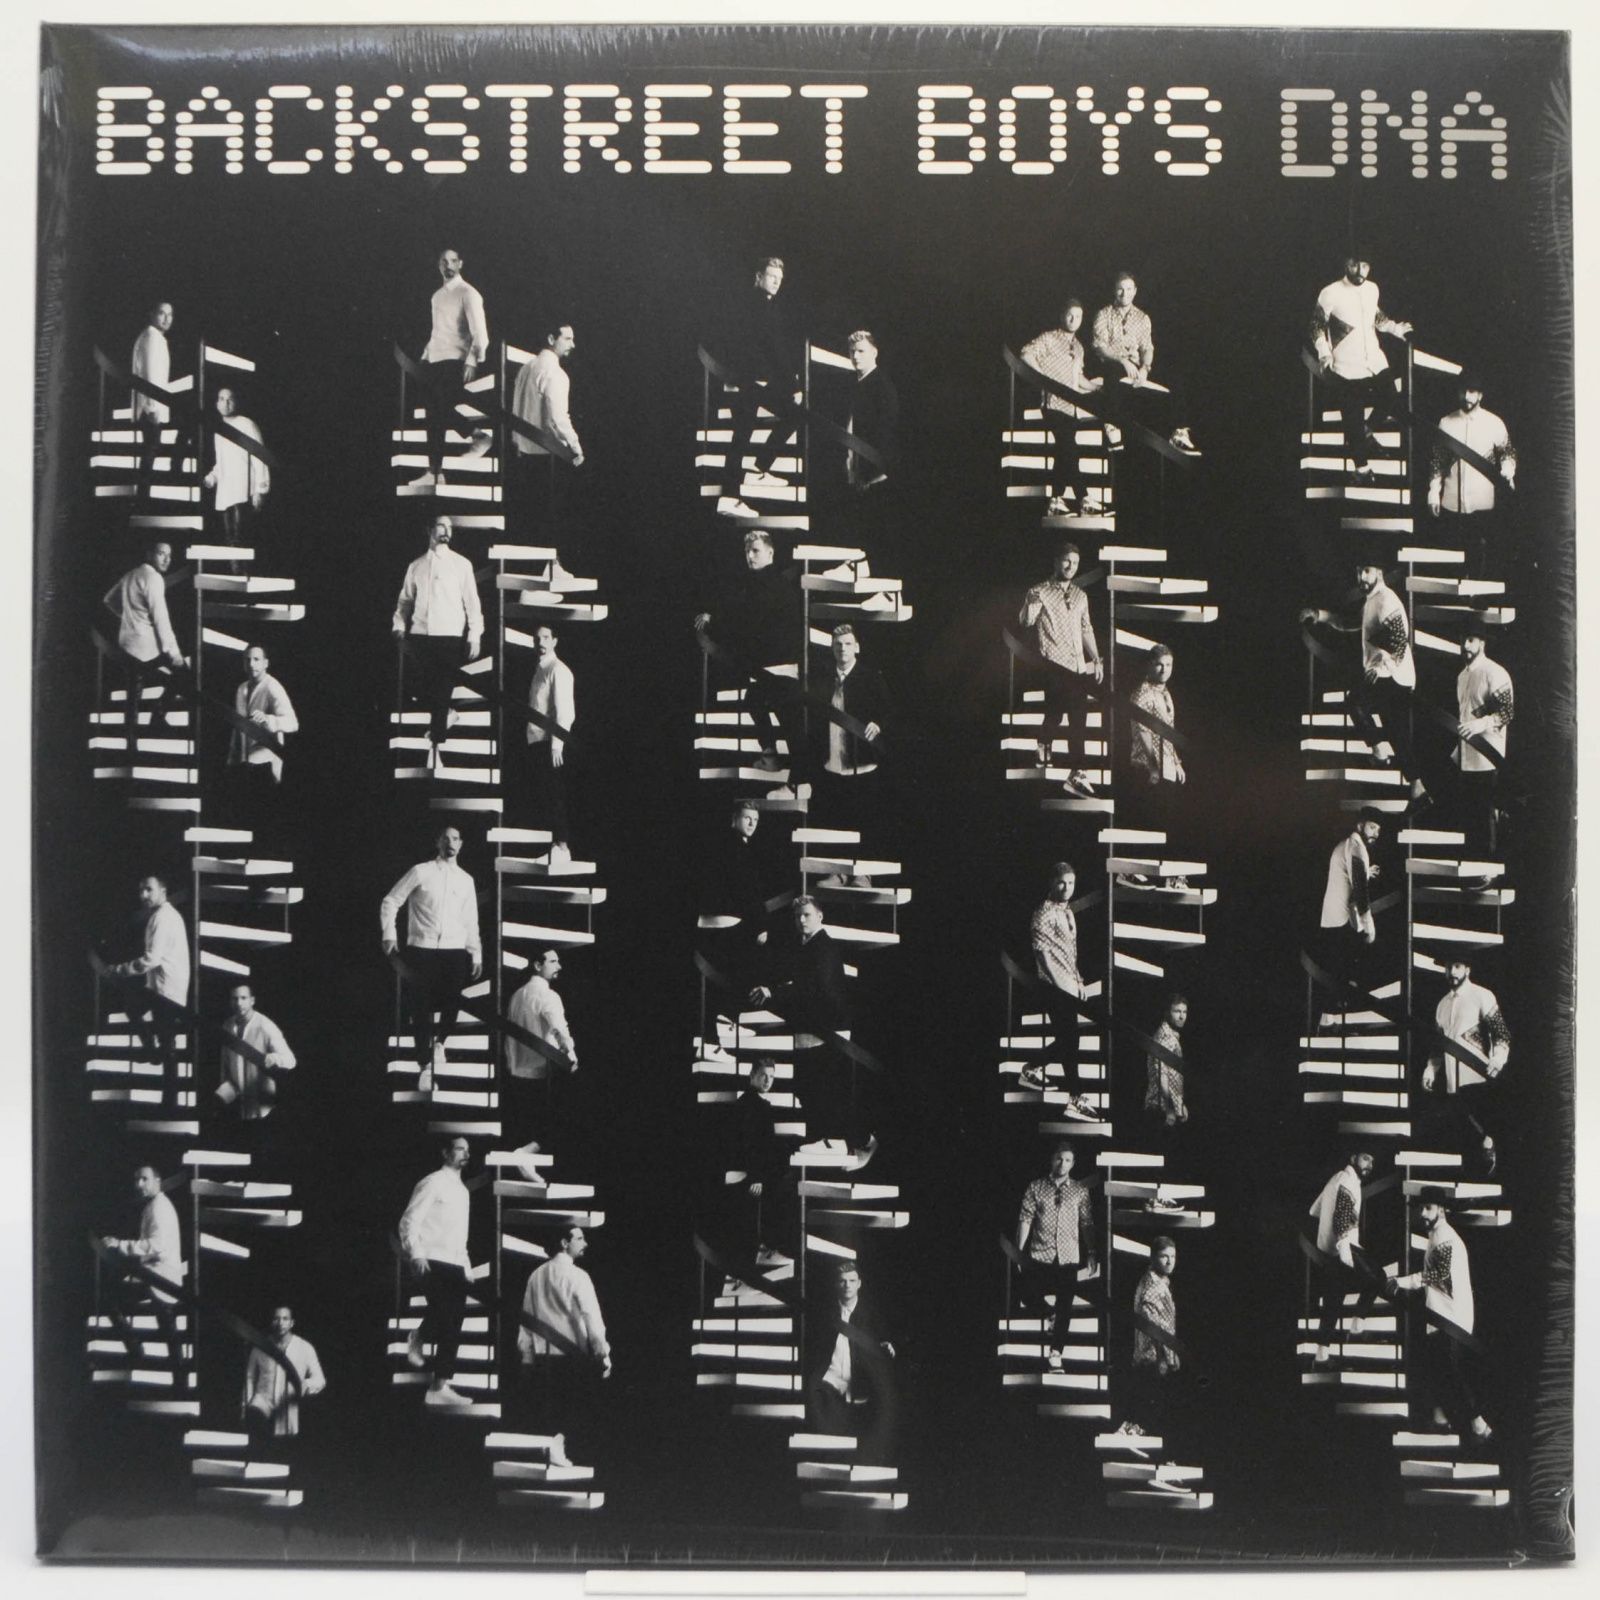 Backstreet Boys — DNA, 2019